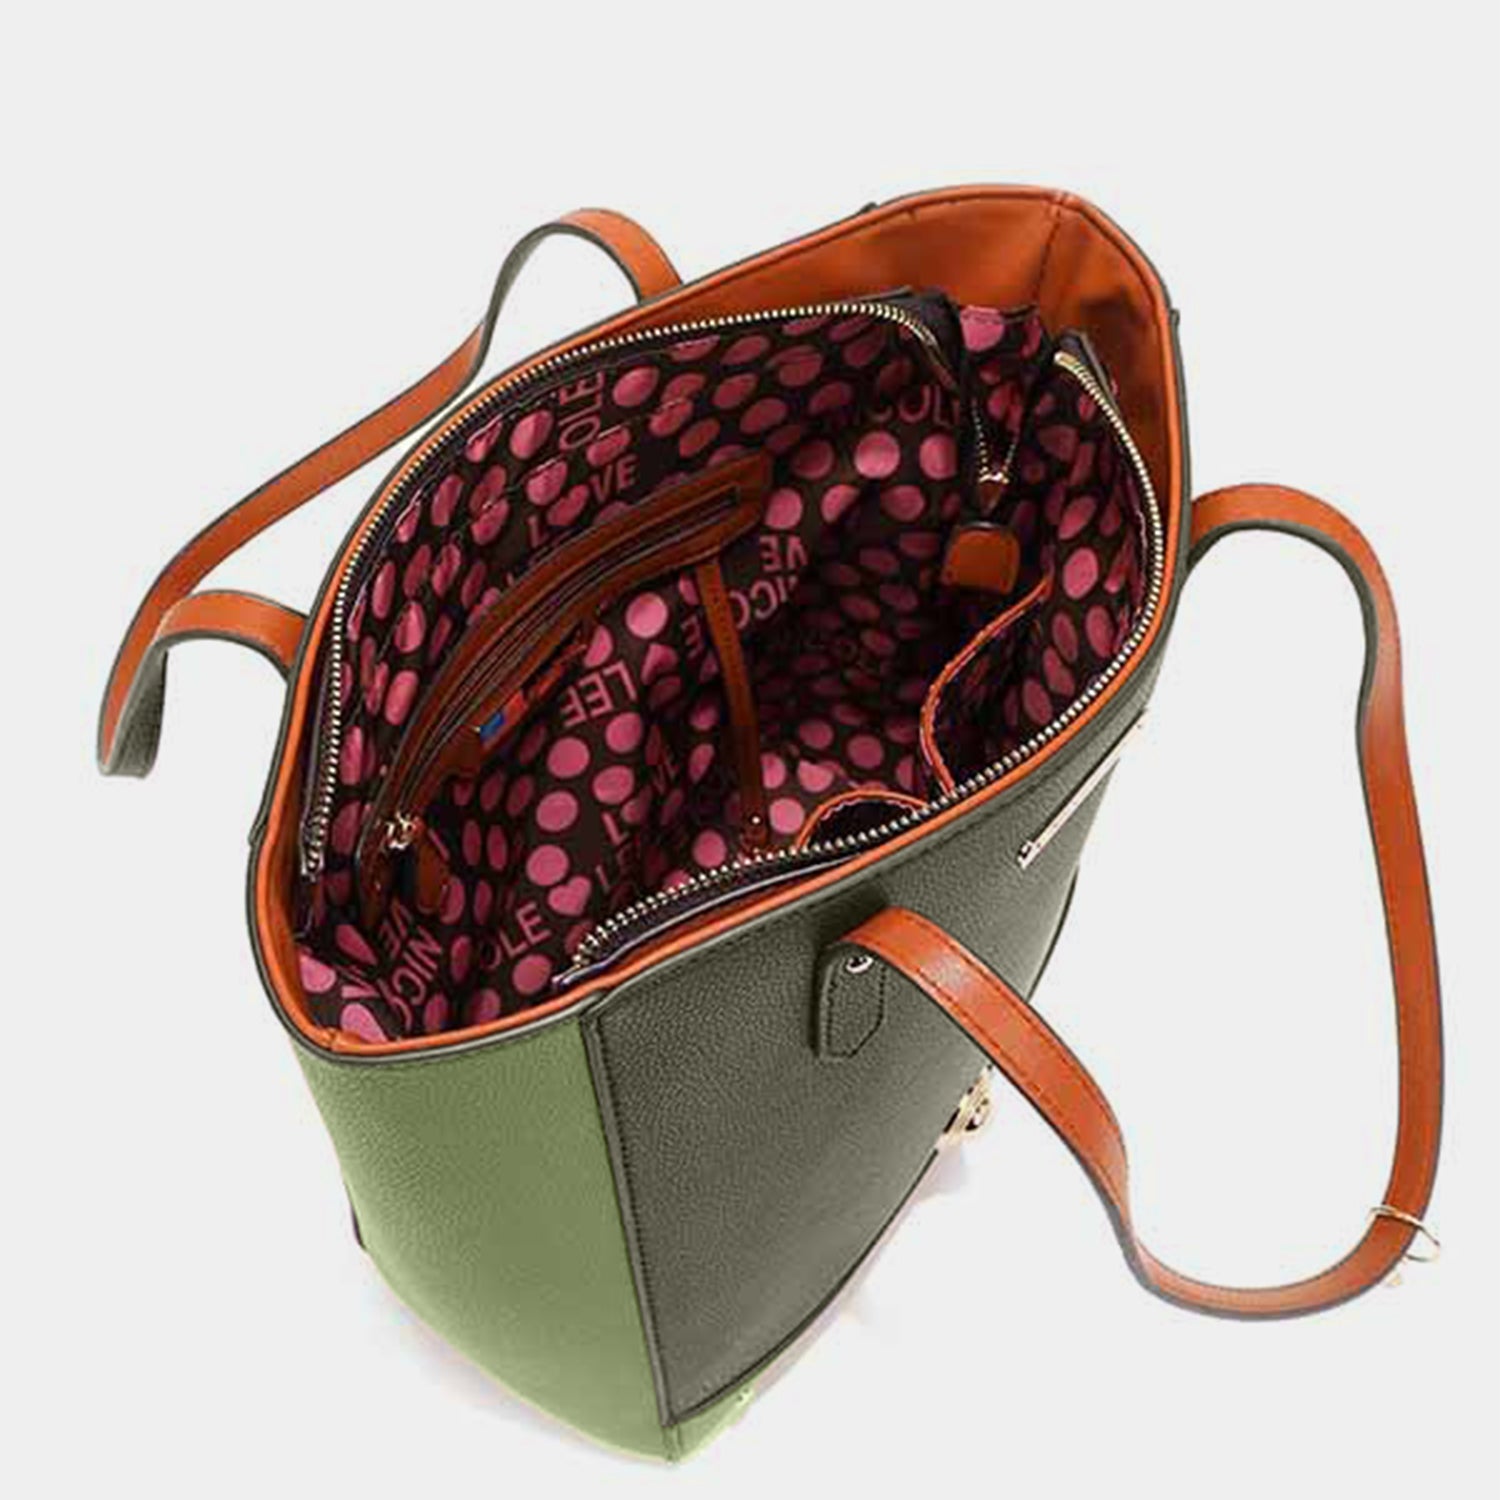 Vegan Leather 3-Piece Contrast Handbag Set in Dark OliveHandbag SetNicole Lee USA